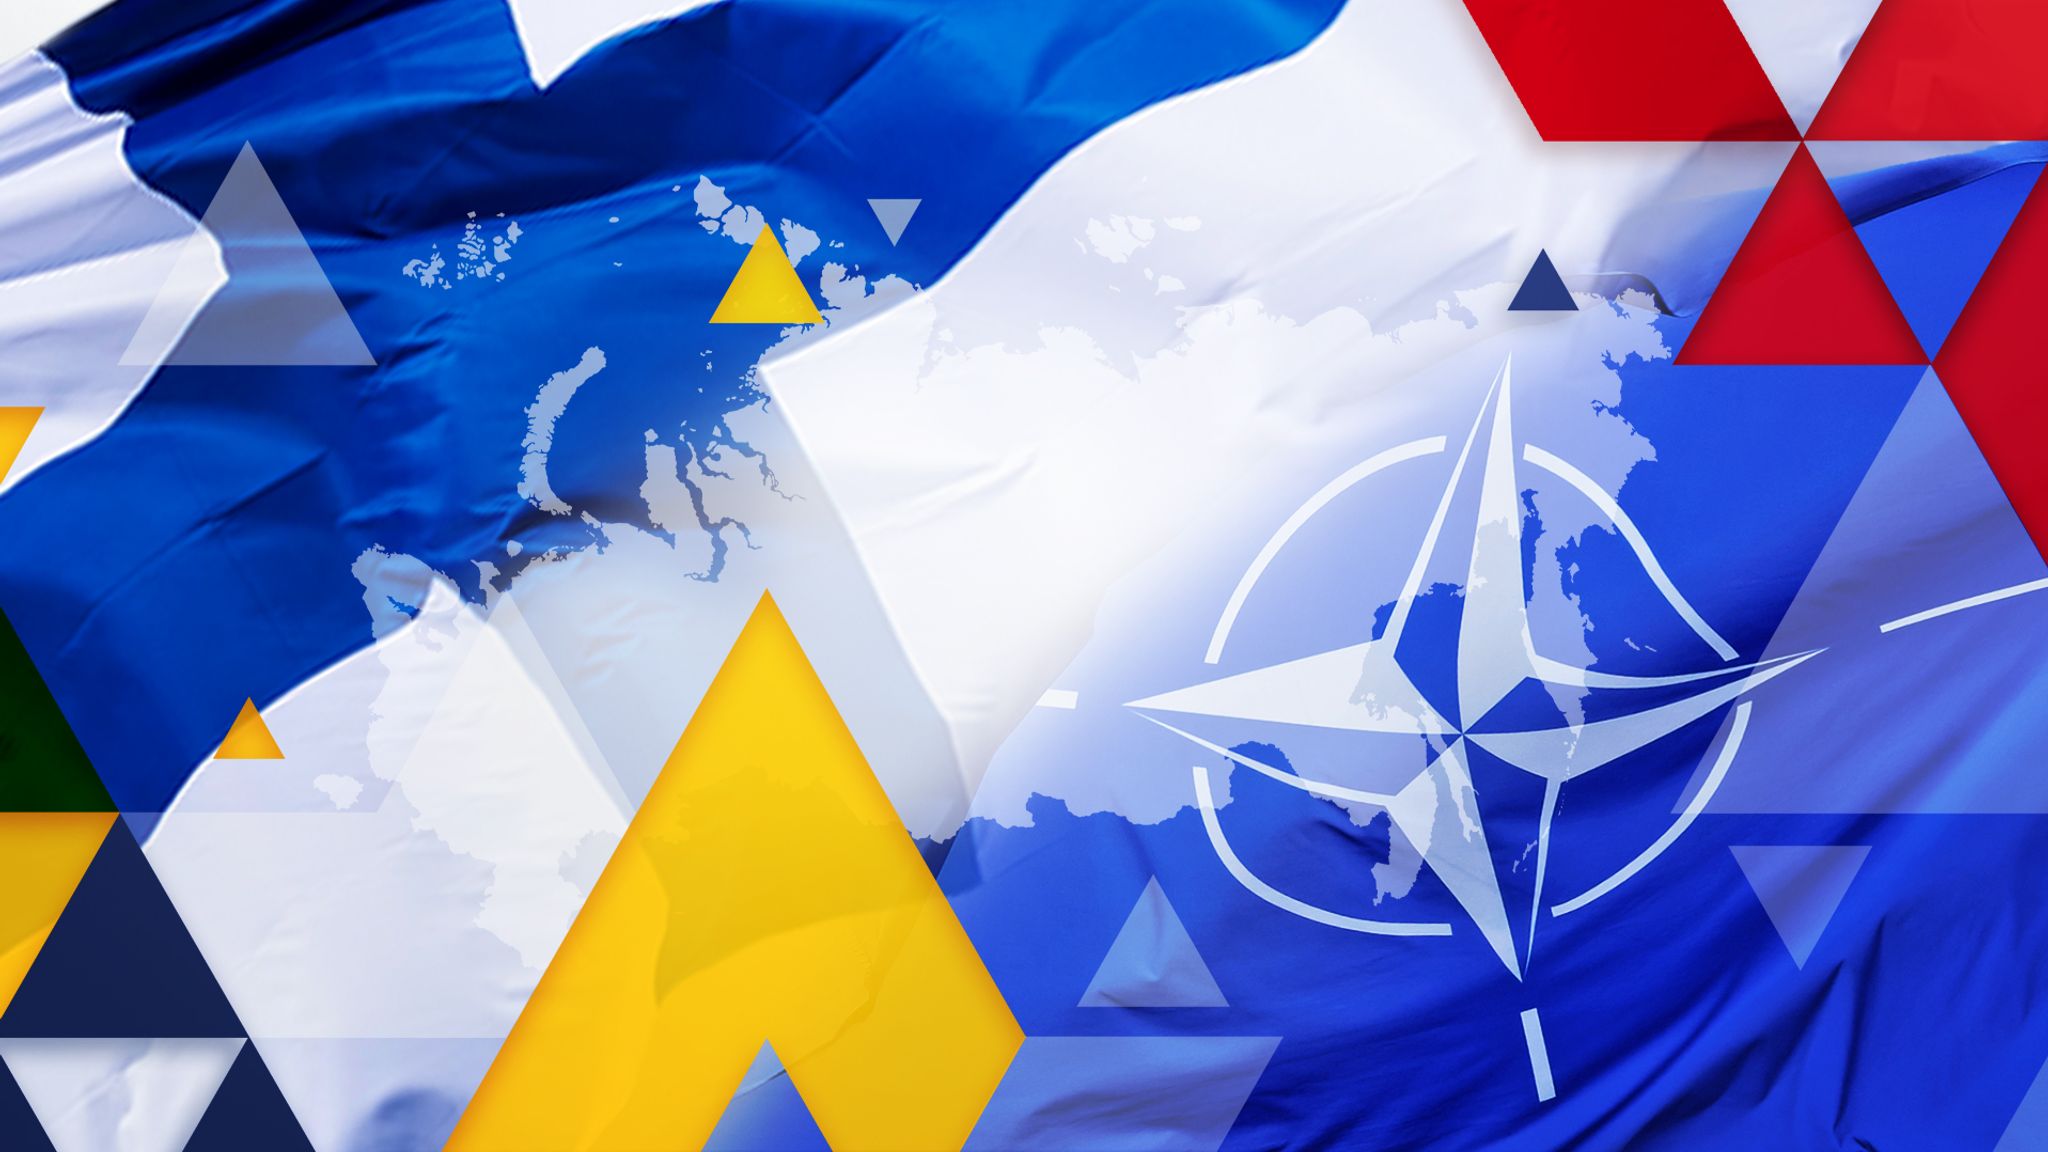 Finland seeks NATO membership, Russia retaliates